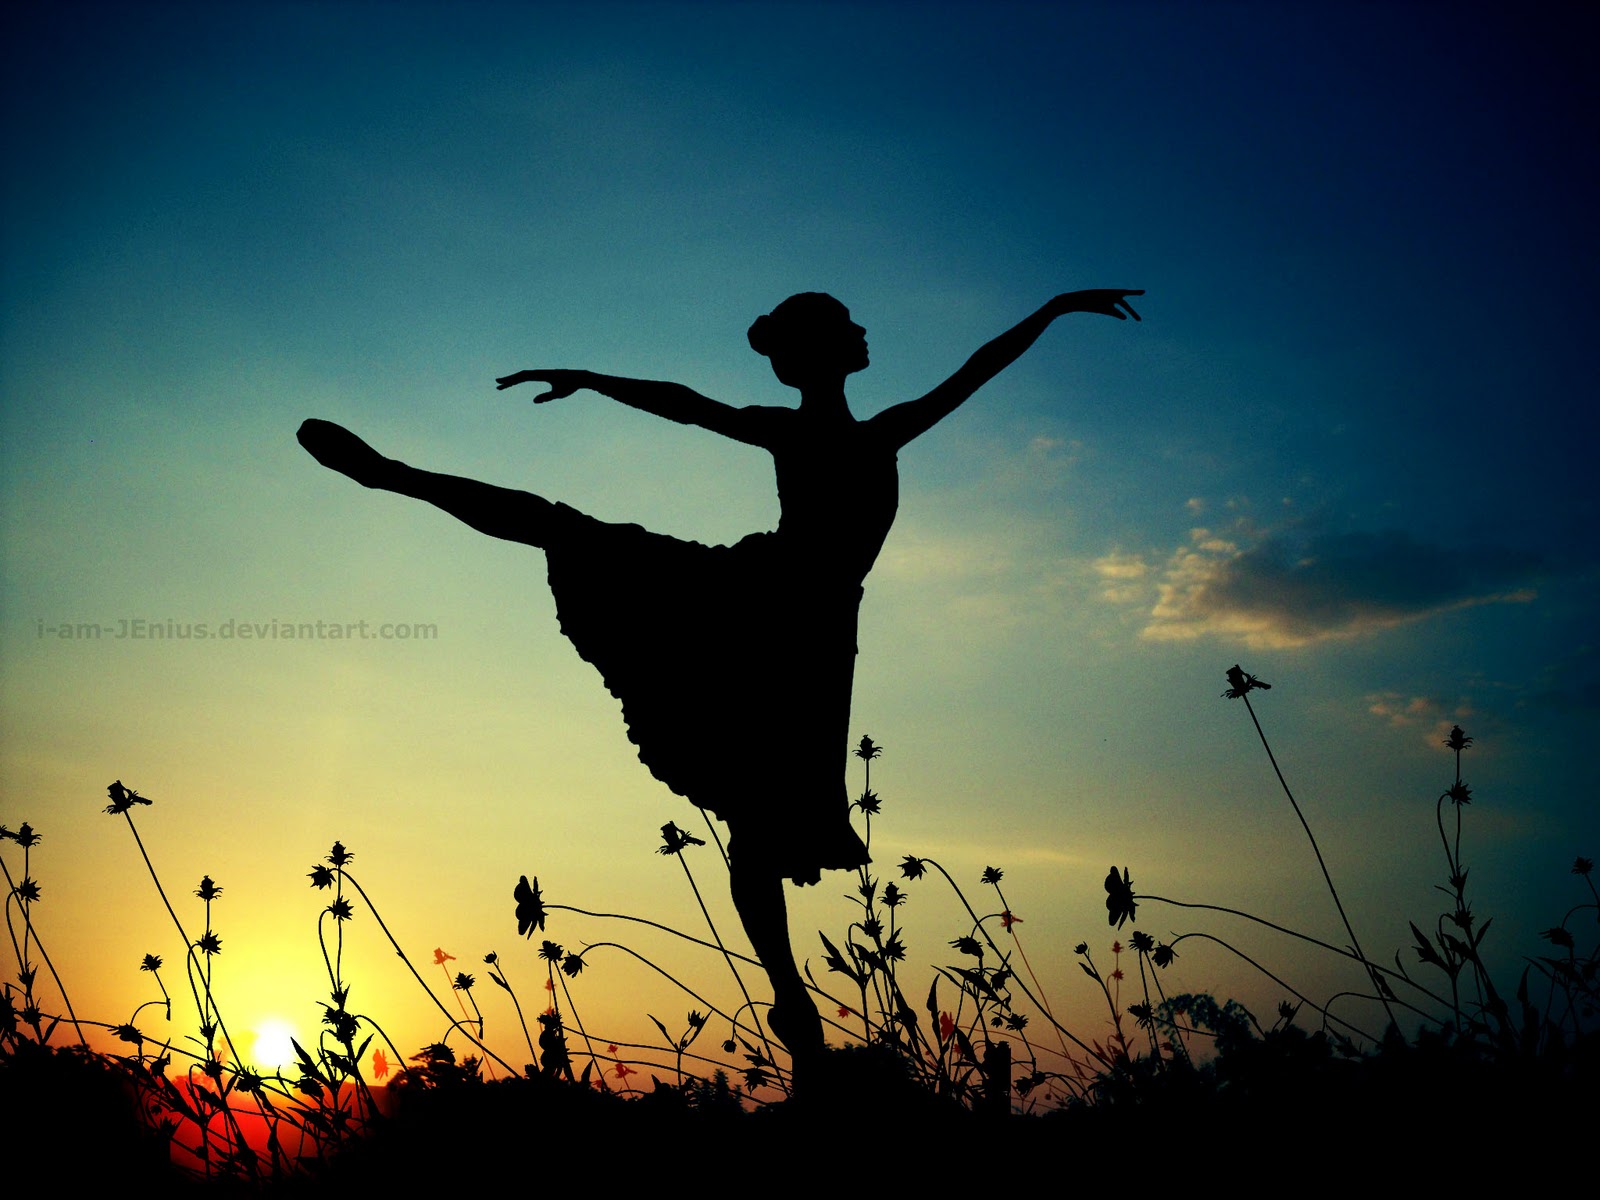 Prima_Ballerina_by_i_am_JENius